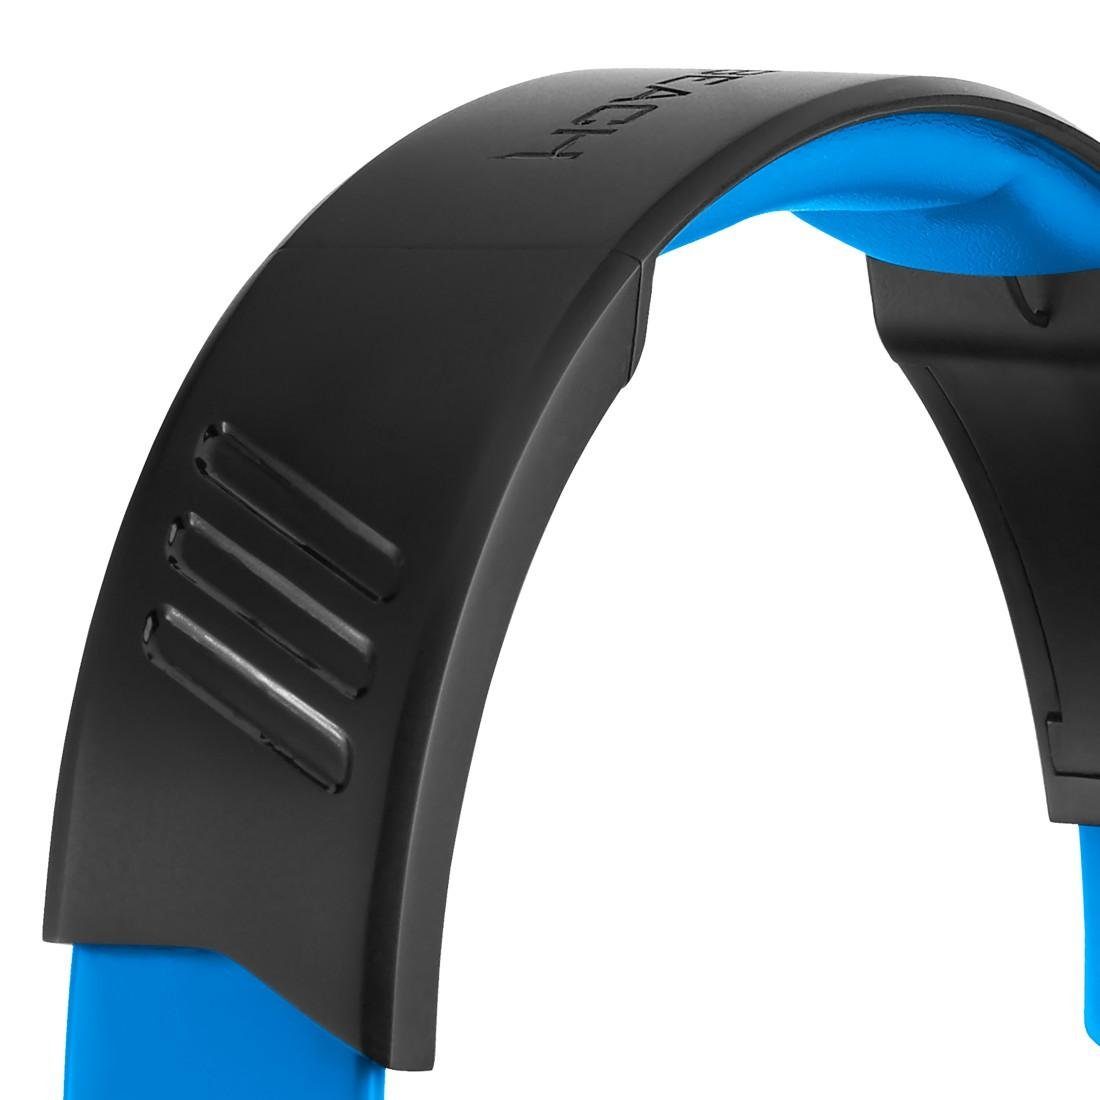 Turtle Beach Recon schwarz/blau 70P Gaming-Headset